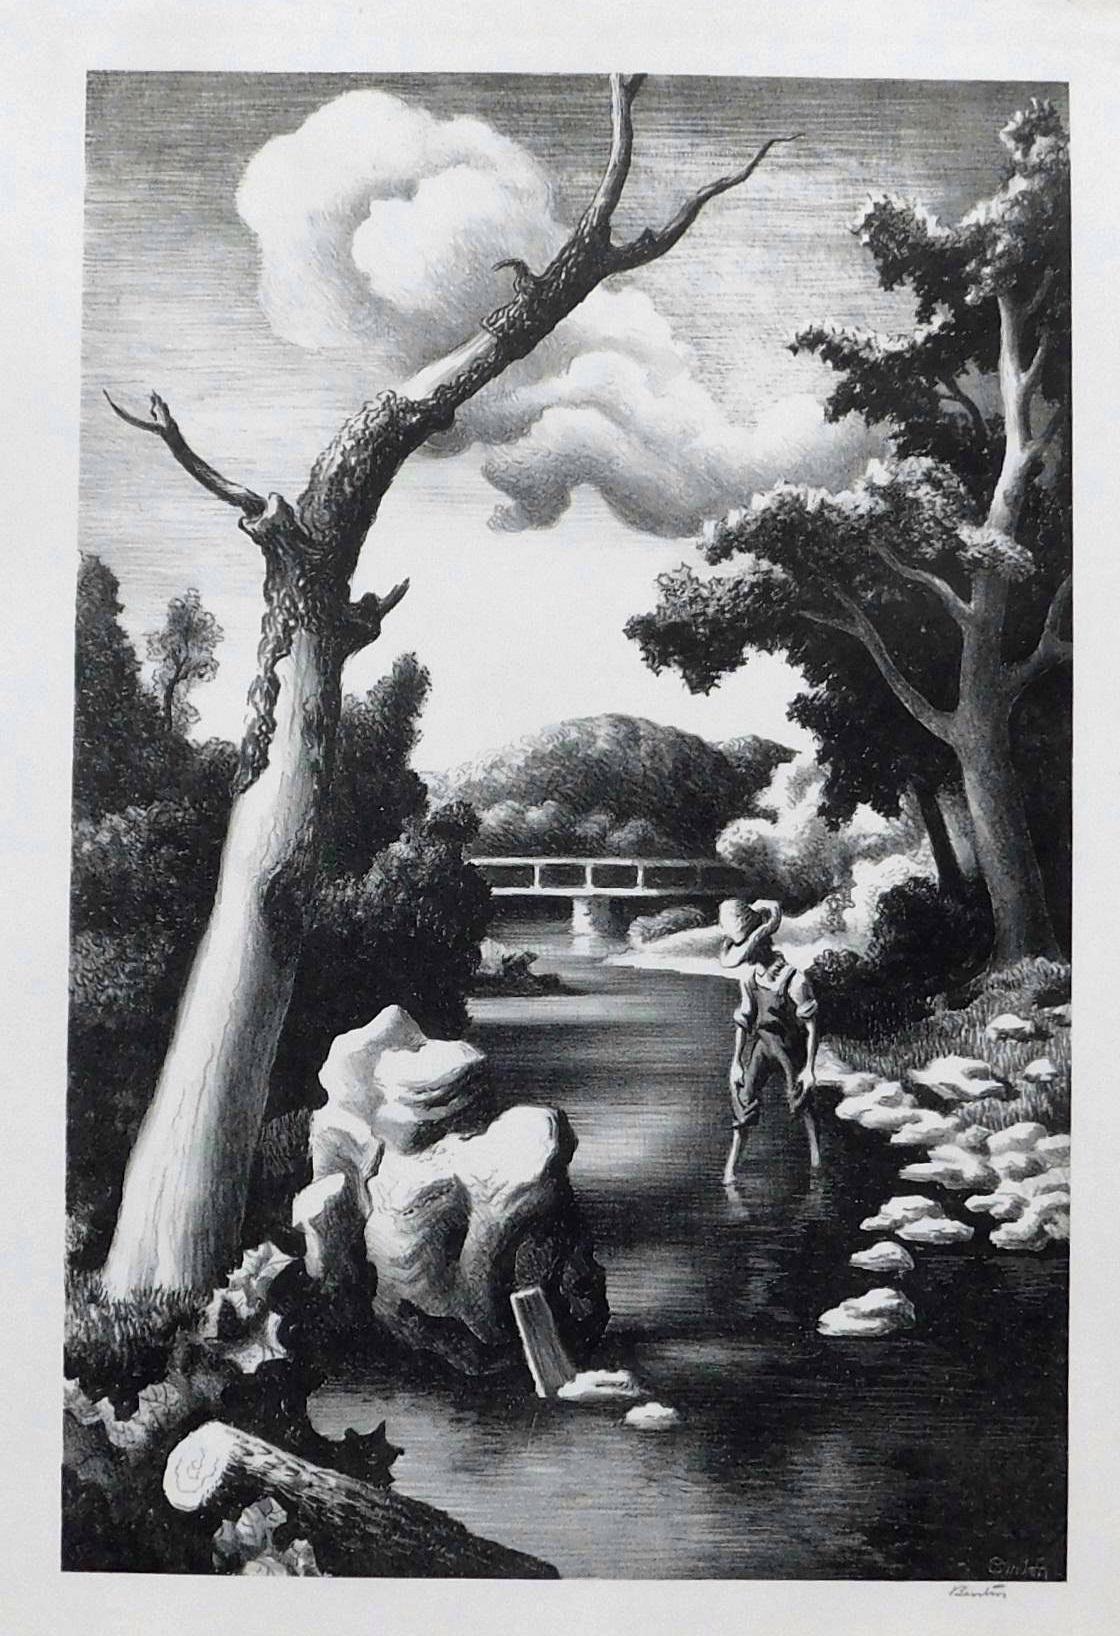 Thomas Hart Benton Original Lithograph, 1939 - "Shallow Creek"